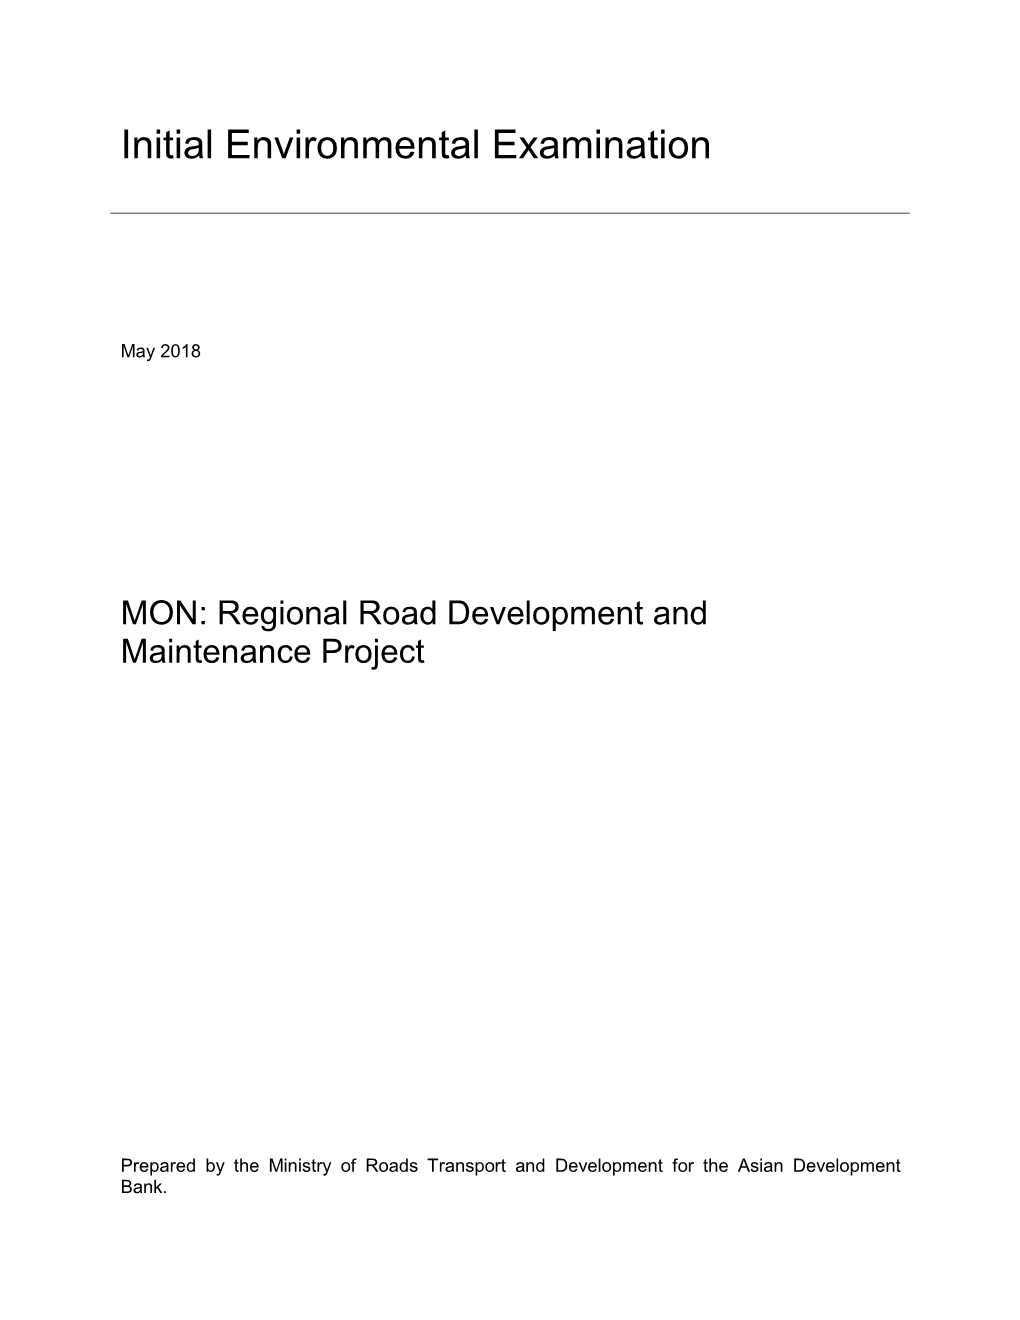 48186-005: Regional Road Development and Maintenance Project